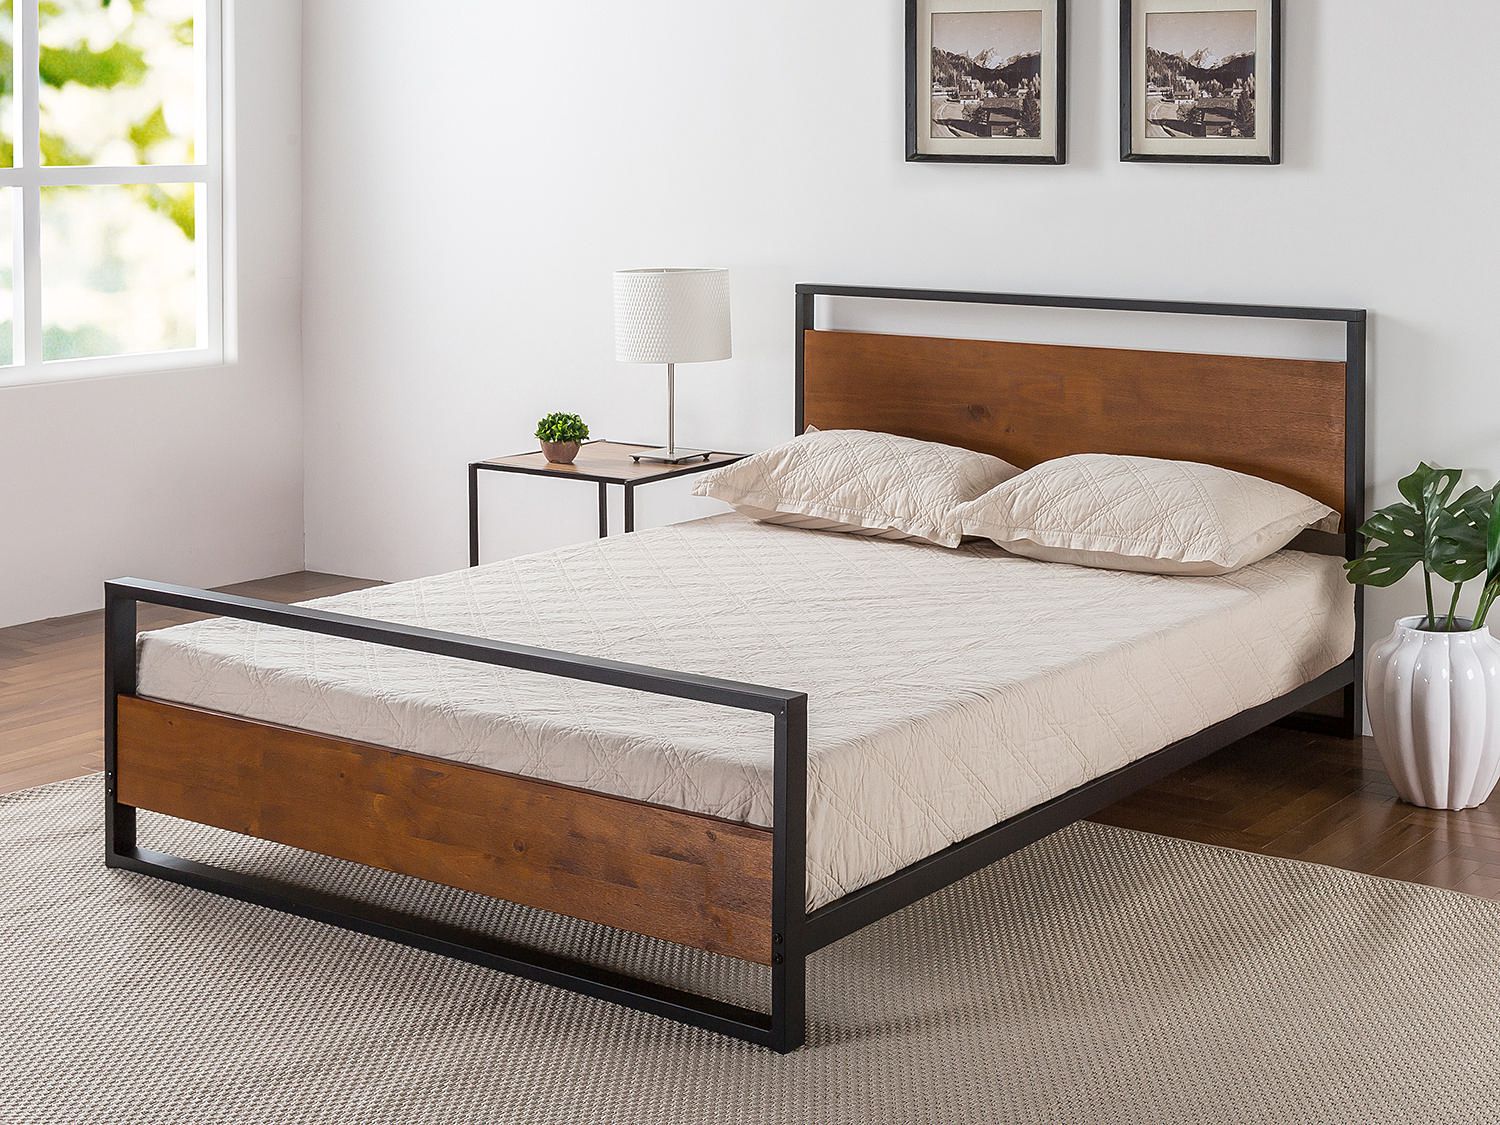 Zinus Ir Metal And Wood Platform, Zinus Metal Bed Frame Review